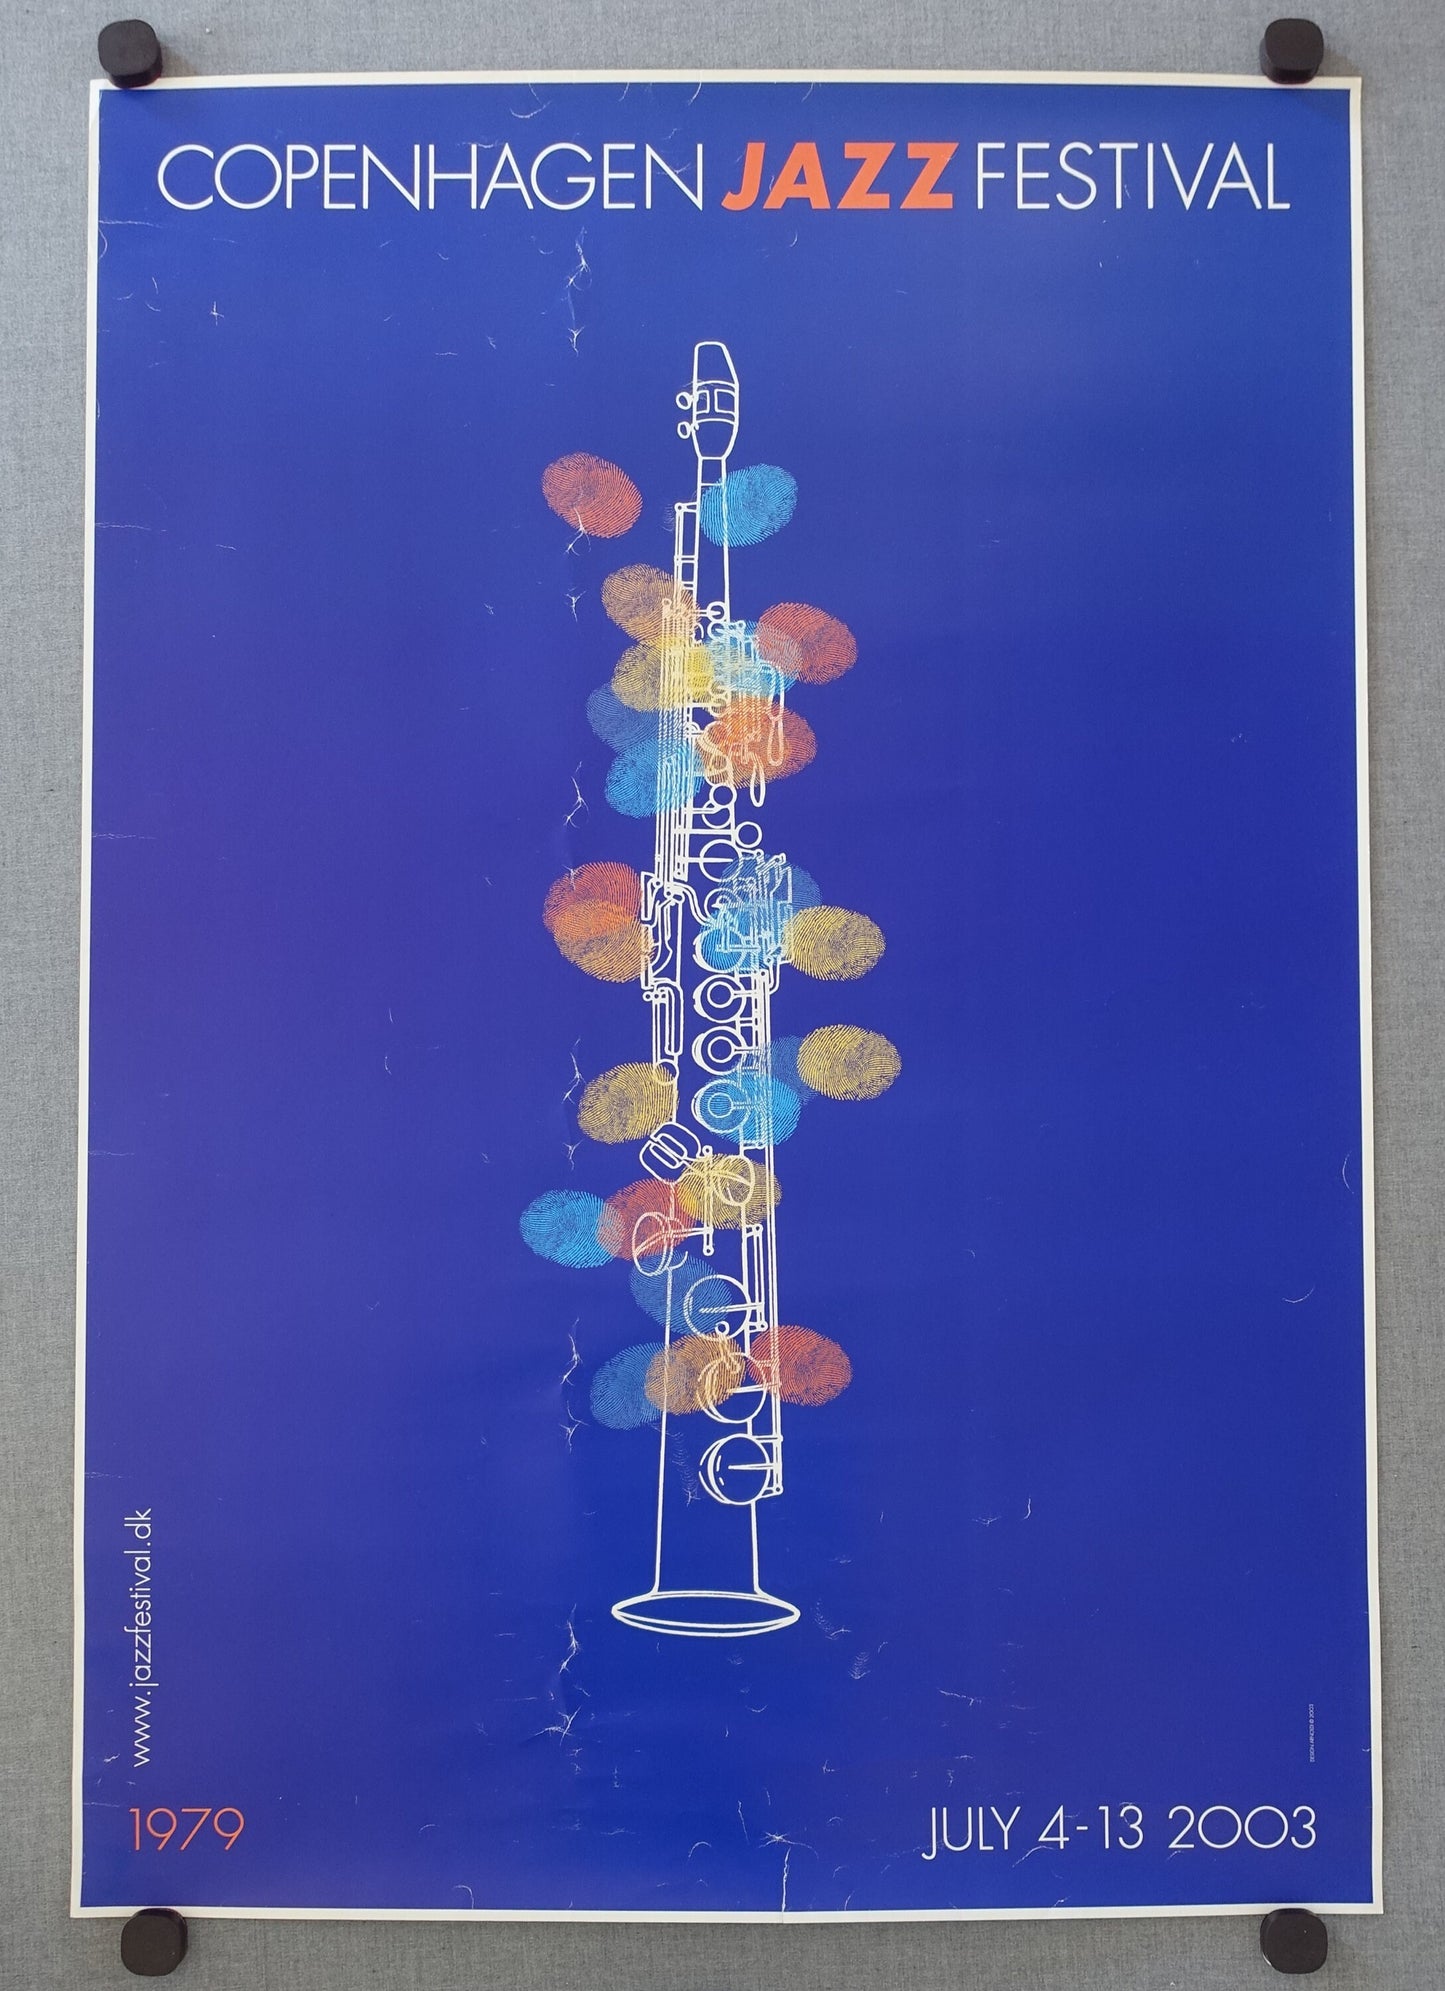 2003 Copenhagen Jazz Festival by Arnoldi - Original Vintage Poster